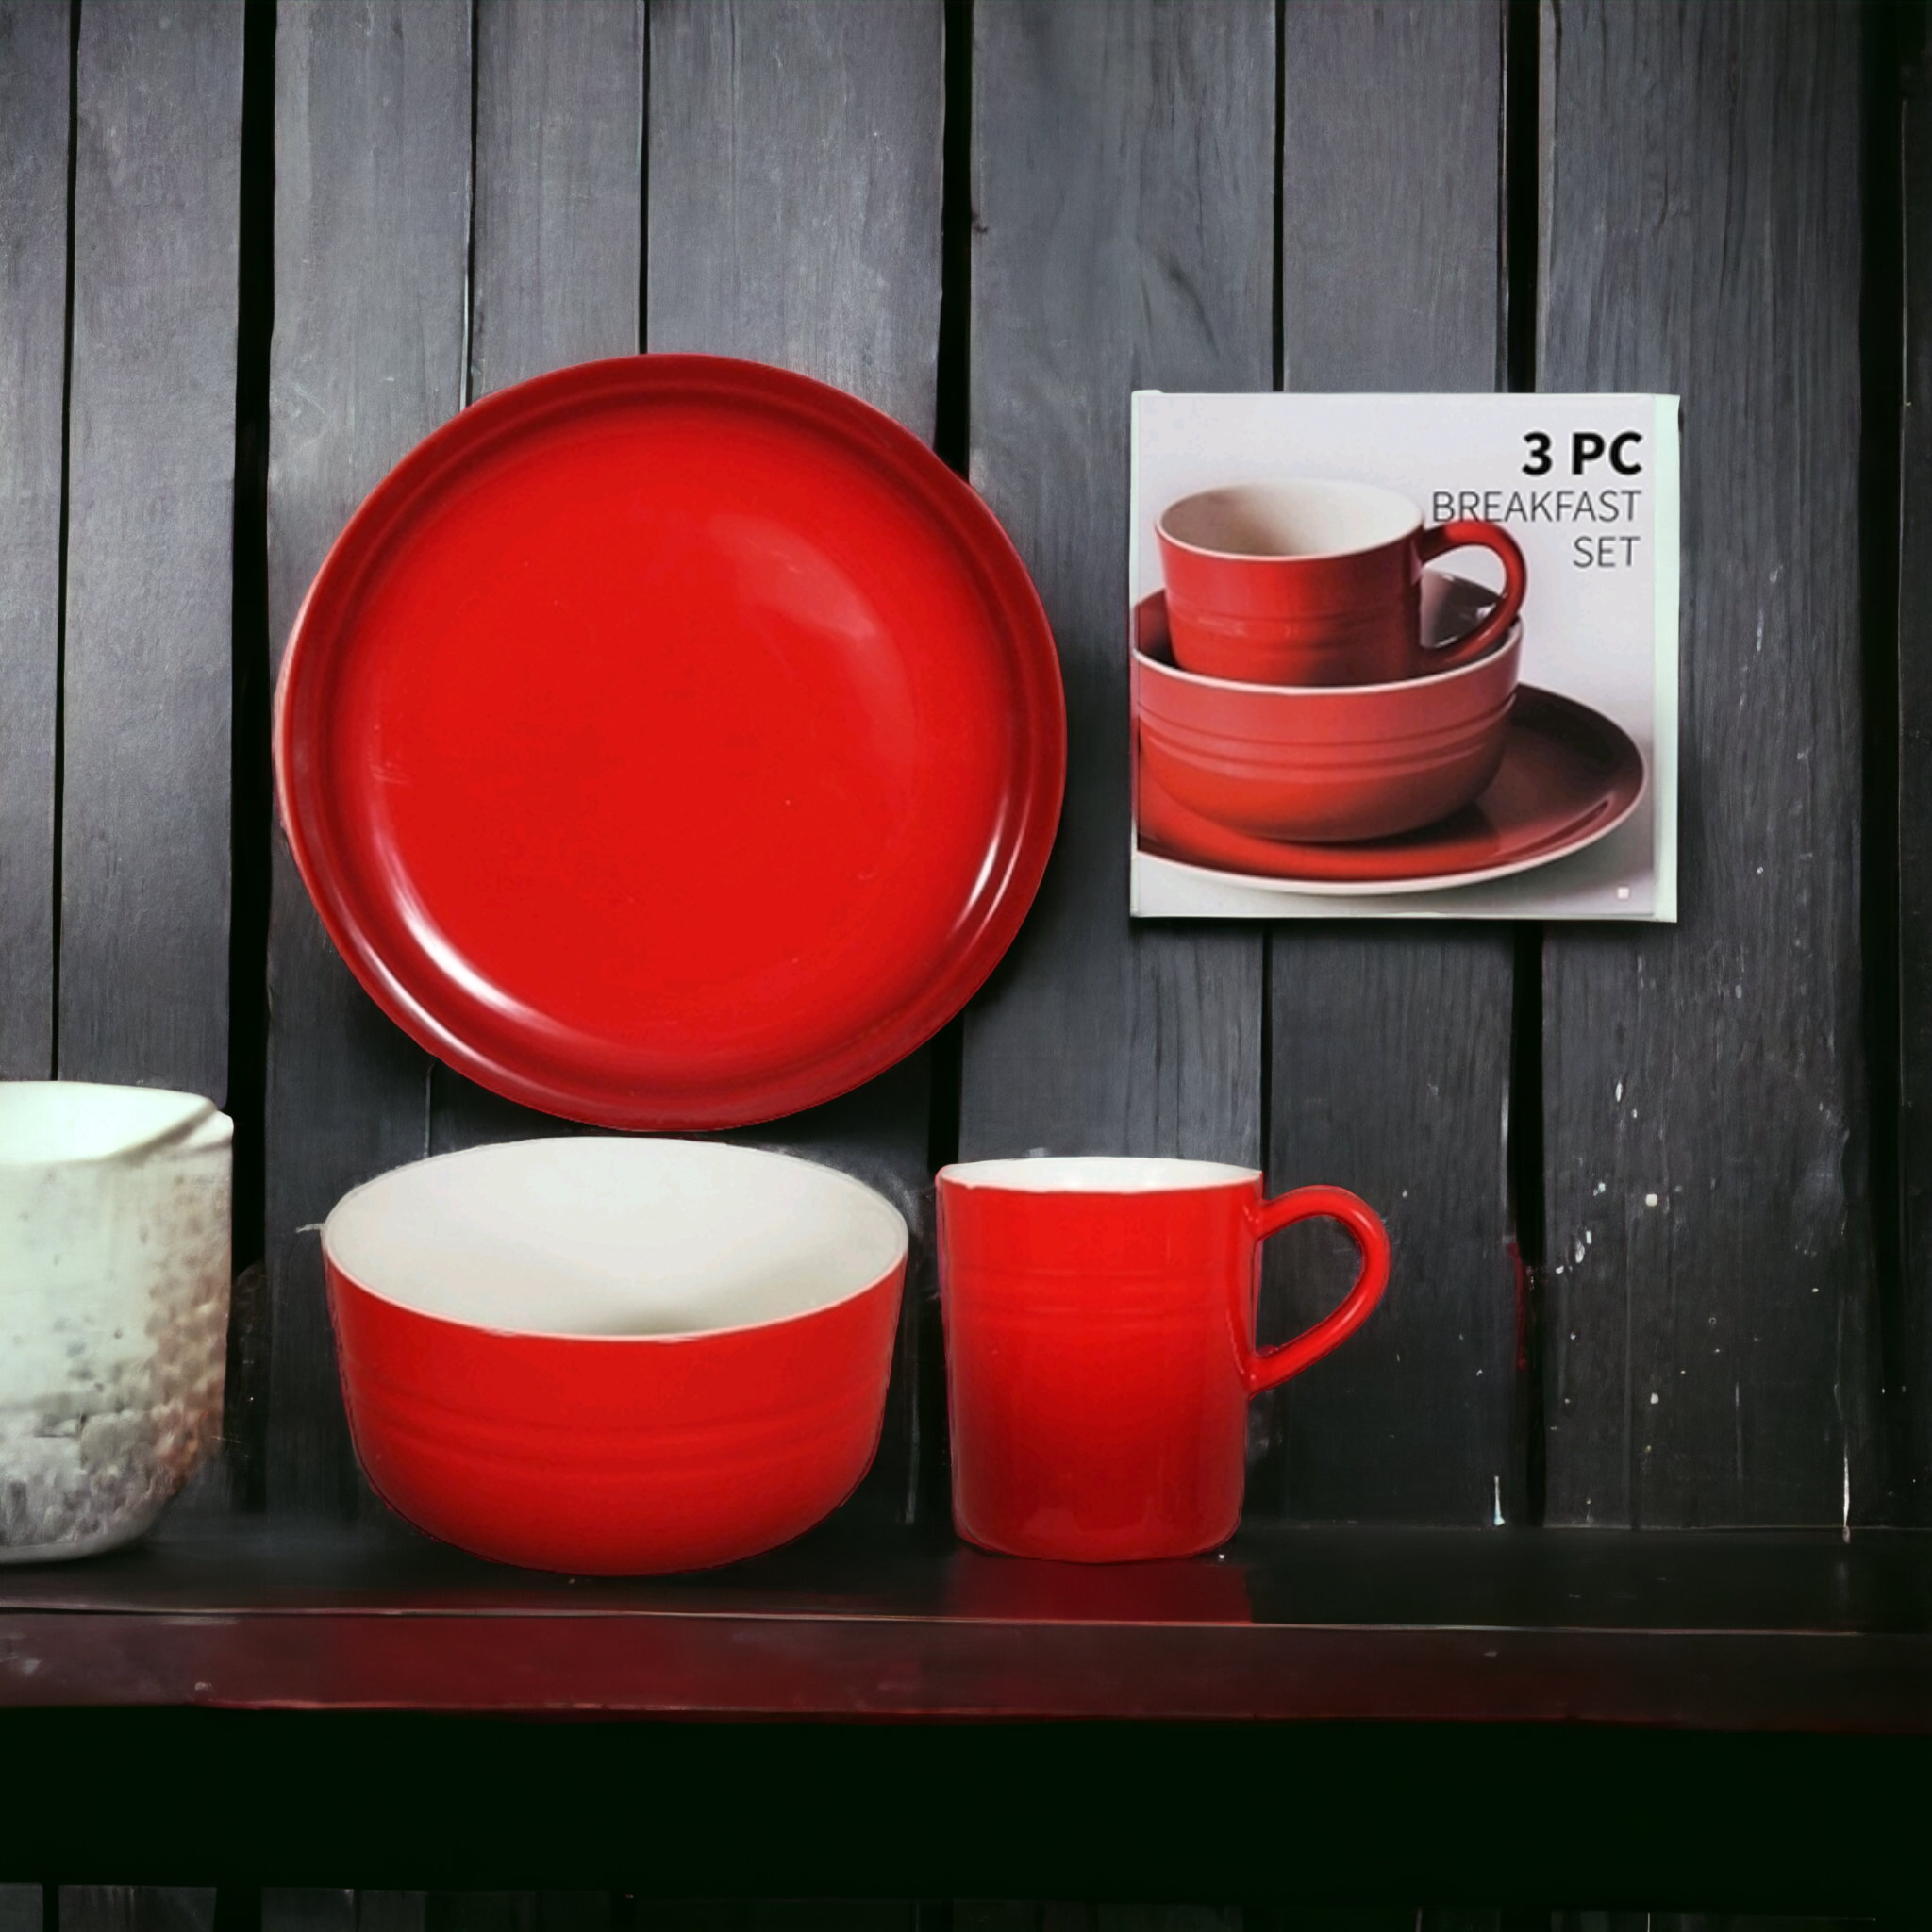 Ceramic Breakfast Set Red 3pcs Dinner Plate Bowl Mug 30504